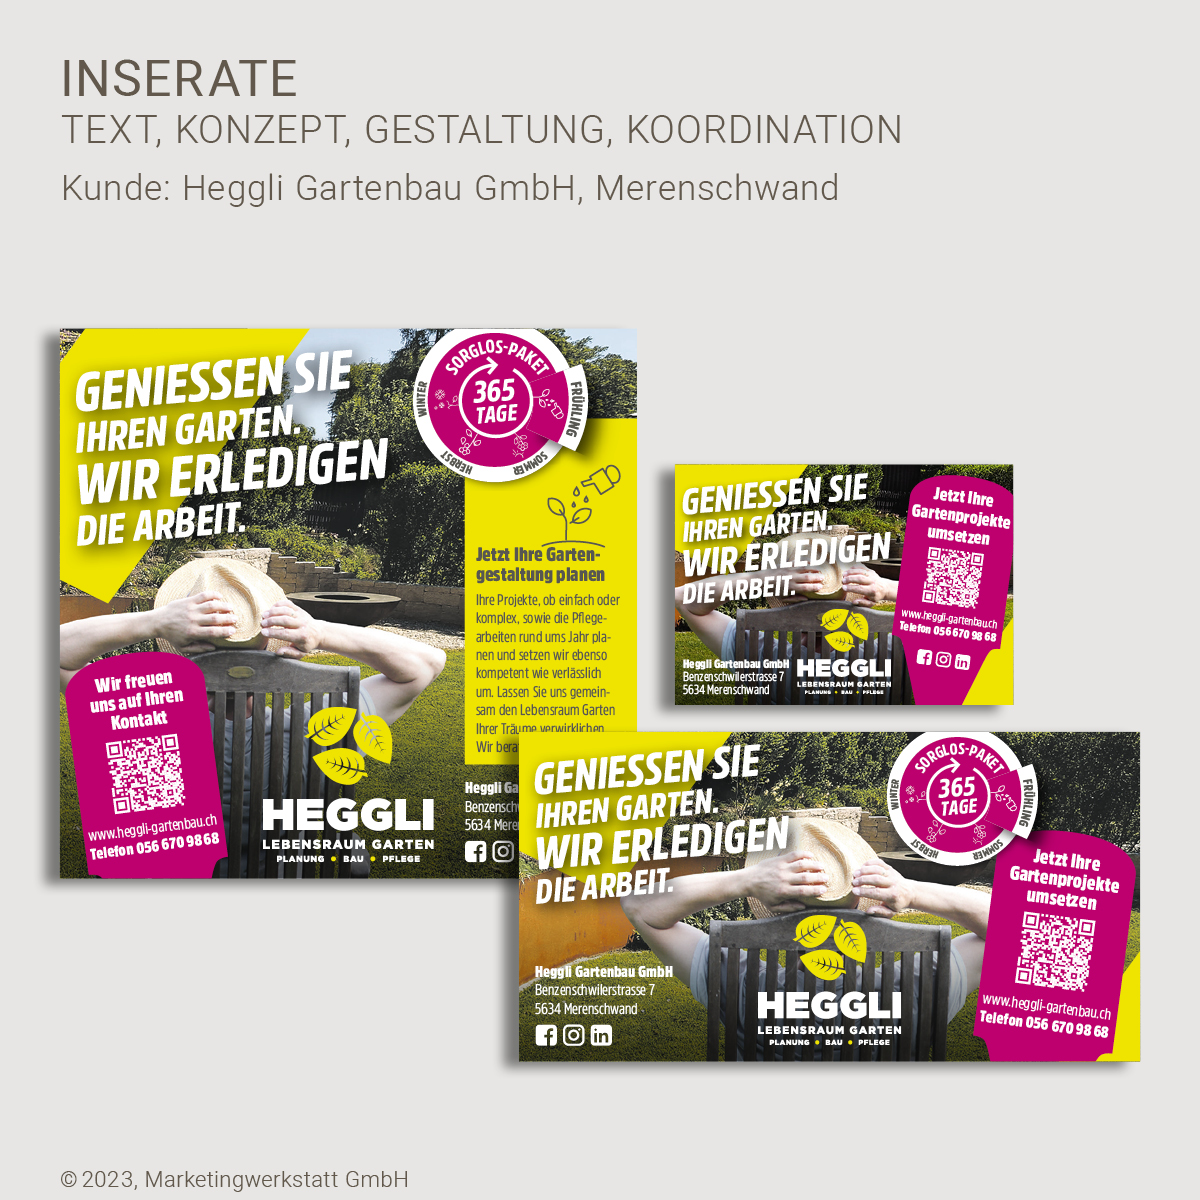 WEB1_GMW_Inserate_Heggli-Gartenbau_02-2023